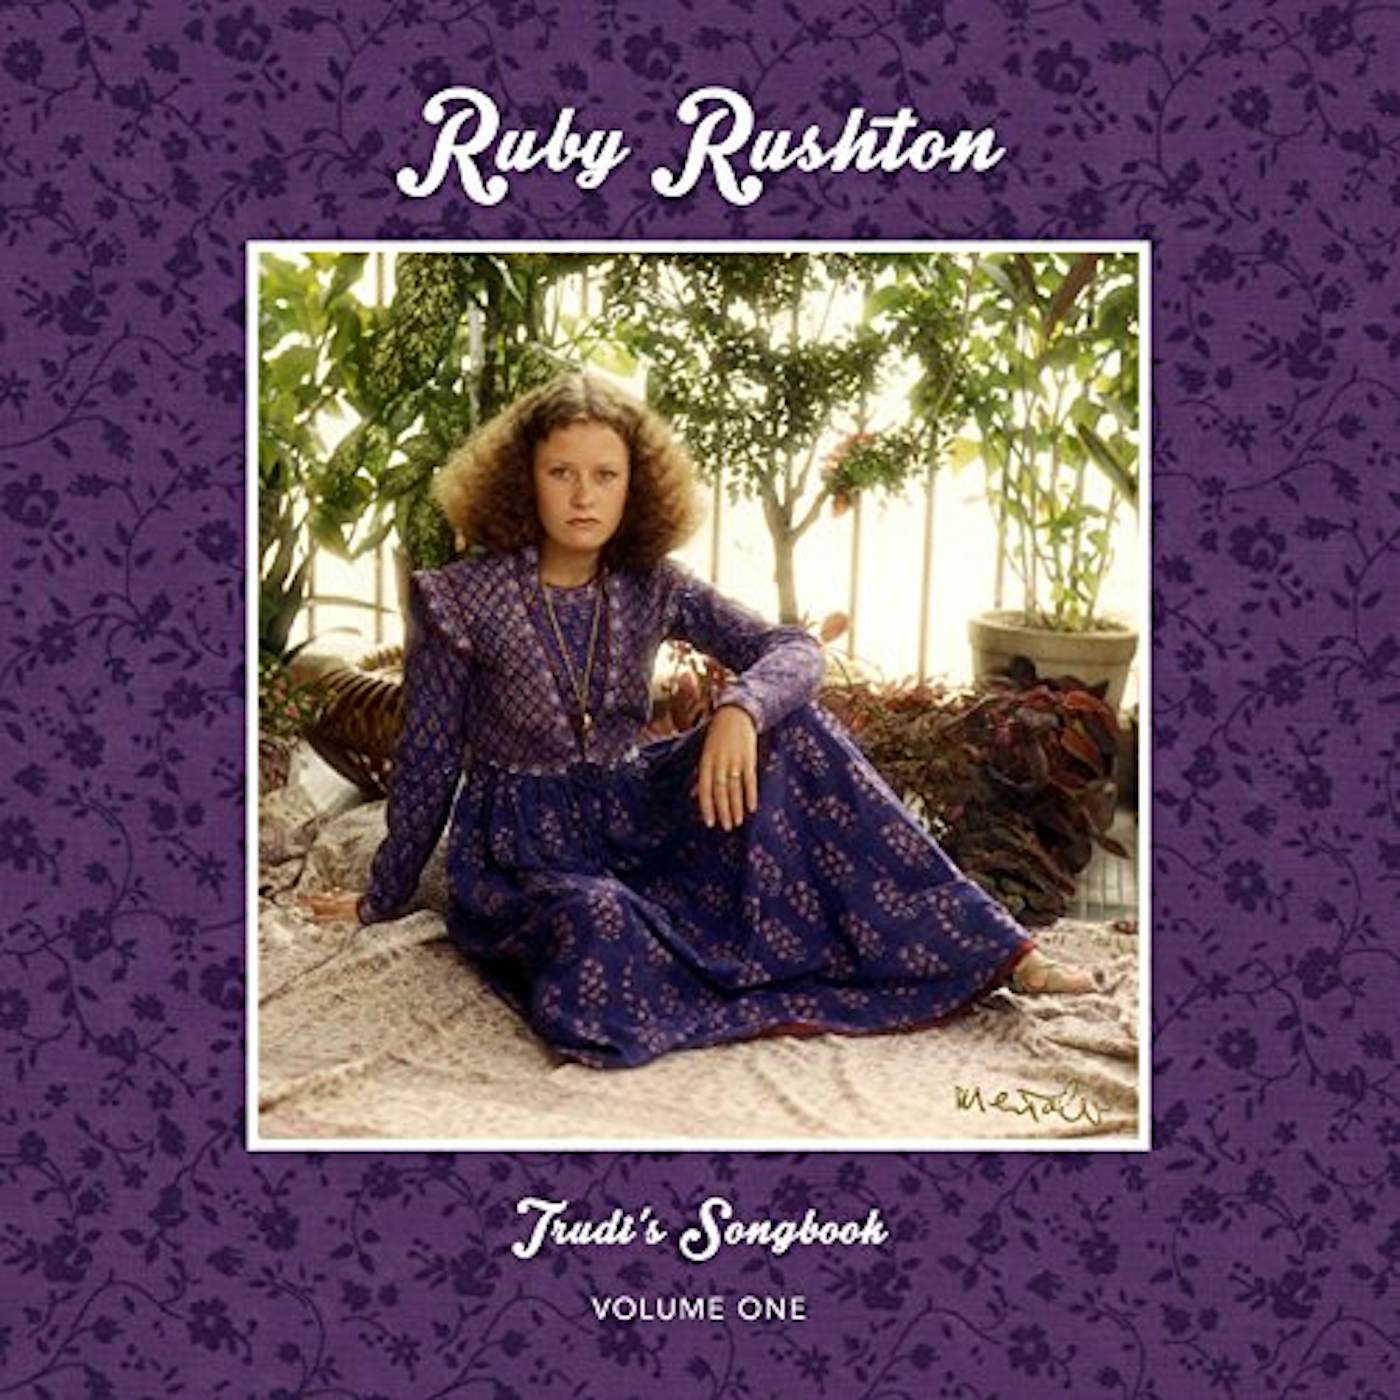 Ruby Rushton TRUDI'S SONGBOOK: VOLUME ONE CD